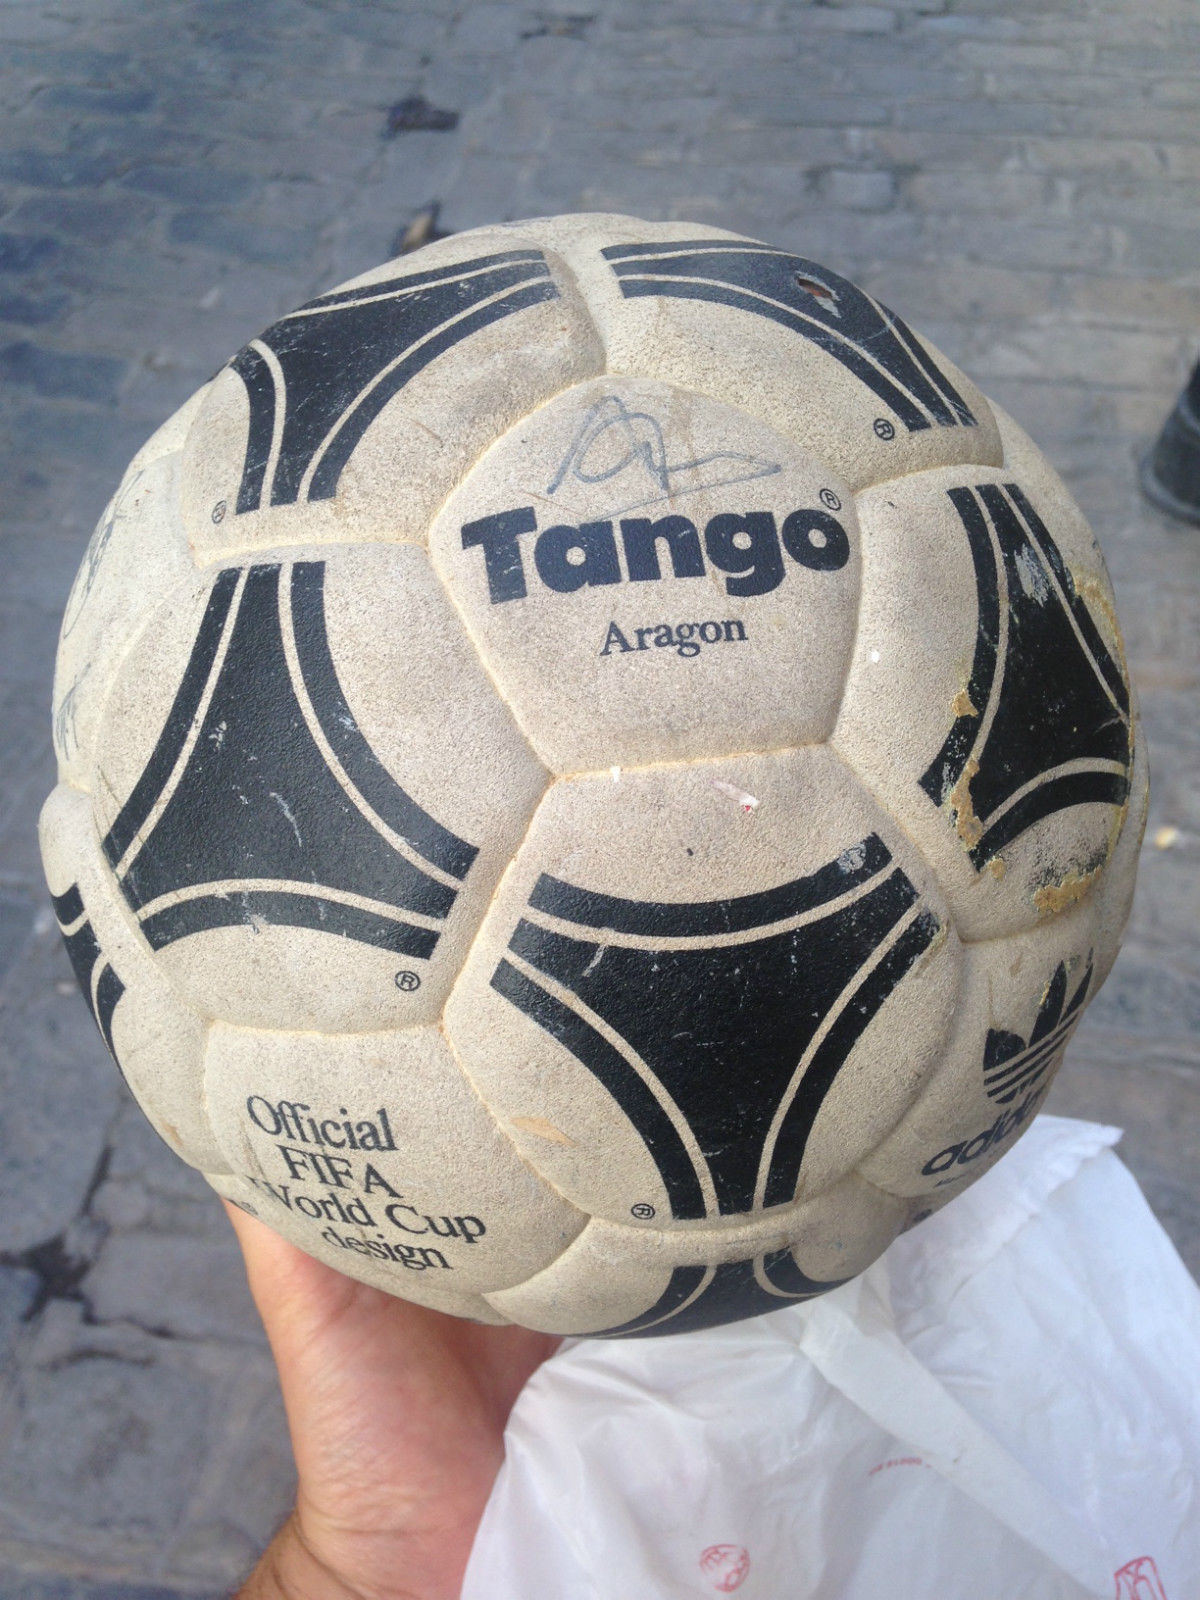 šansa Osloniti se osjetljivost balon tango adidas 1982 Raspored grad Peto